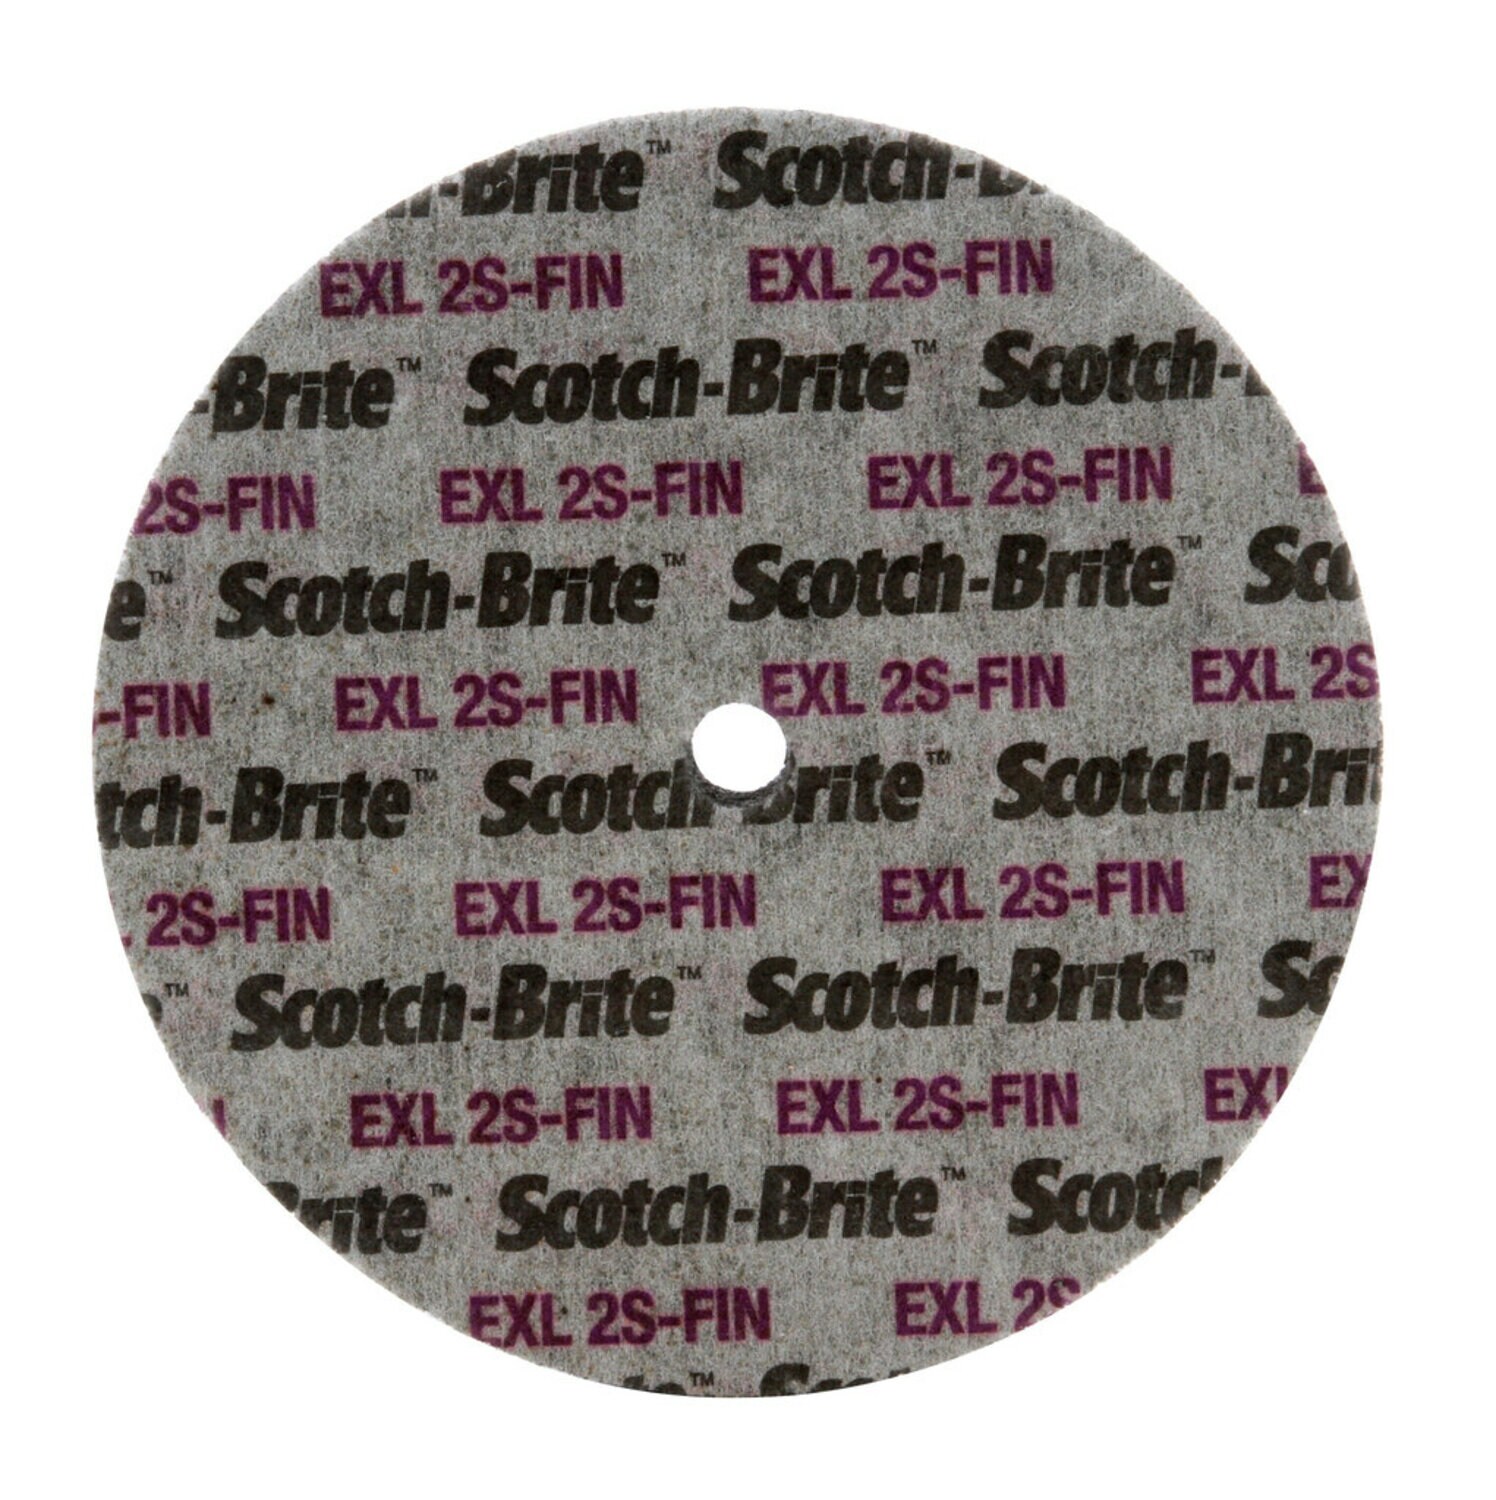 7000028478 - Scotch-Brite EXL Unitized Wheel, XL-UW, 2S Fine, 6 in x 1/2 in x 1/2
in, 4 ea/Case